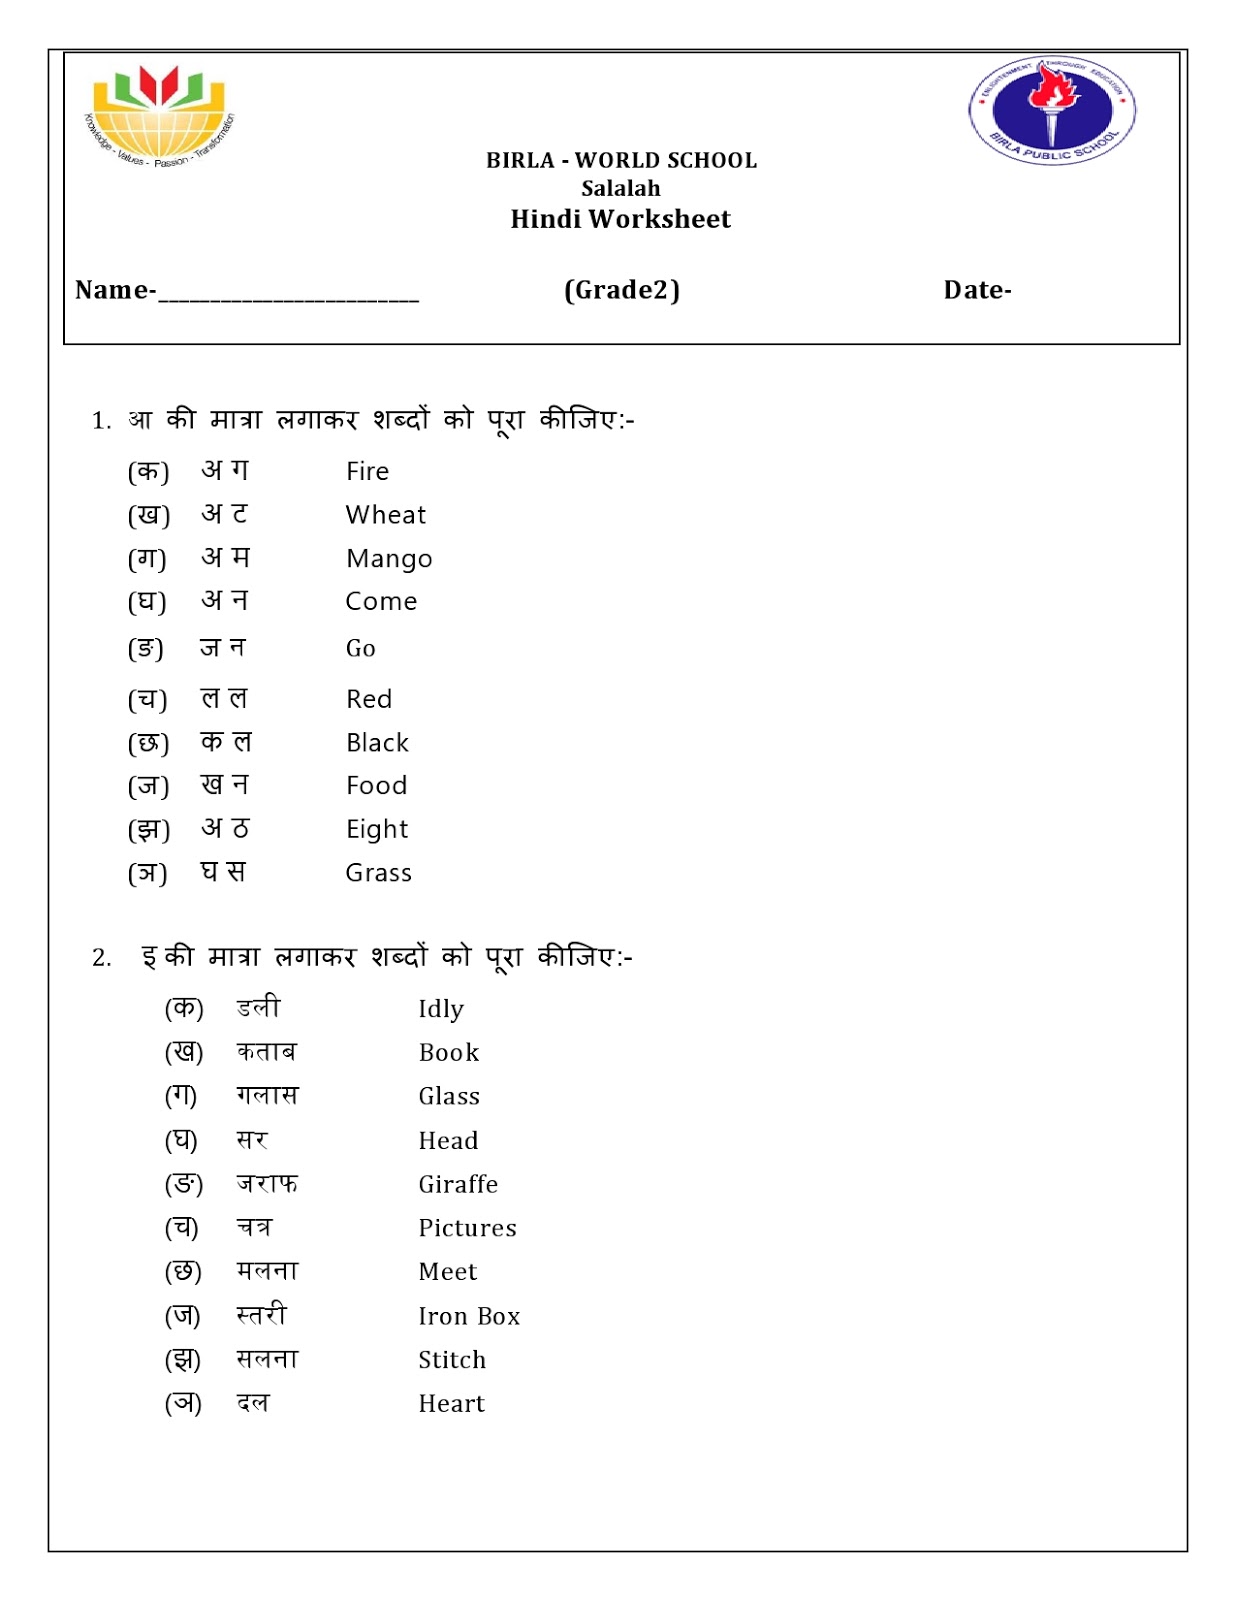 birla-world-school-oman-homework-for-grade-2-b-on-26-5-16